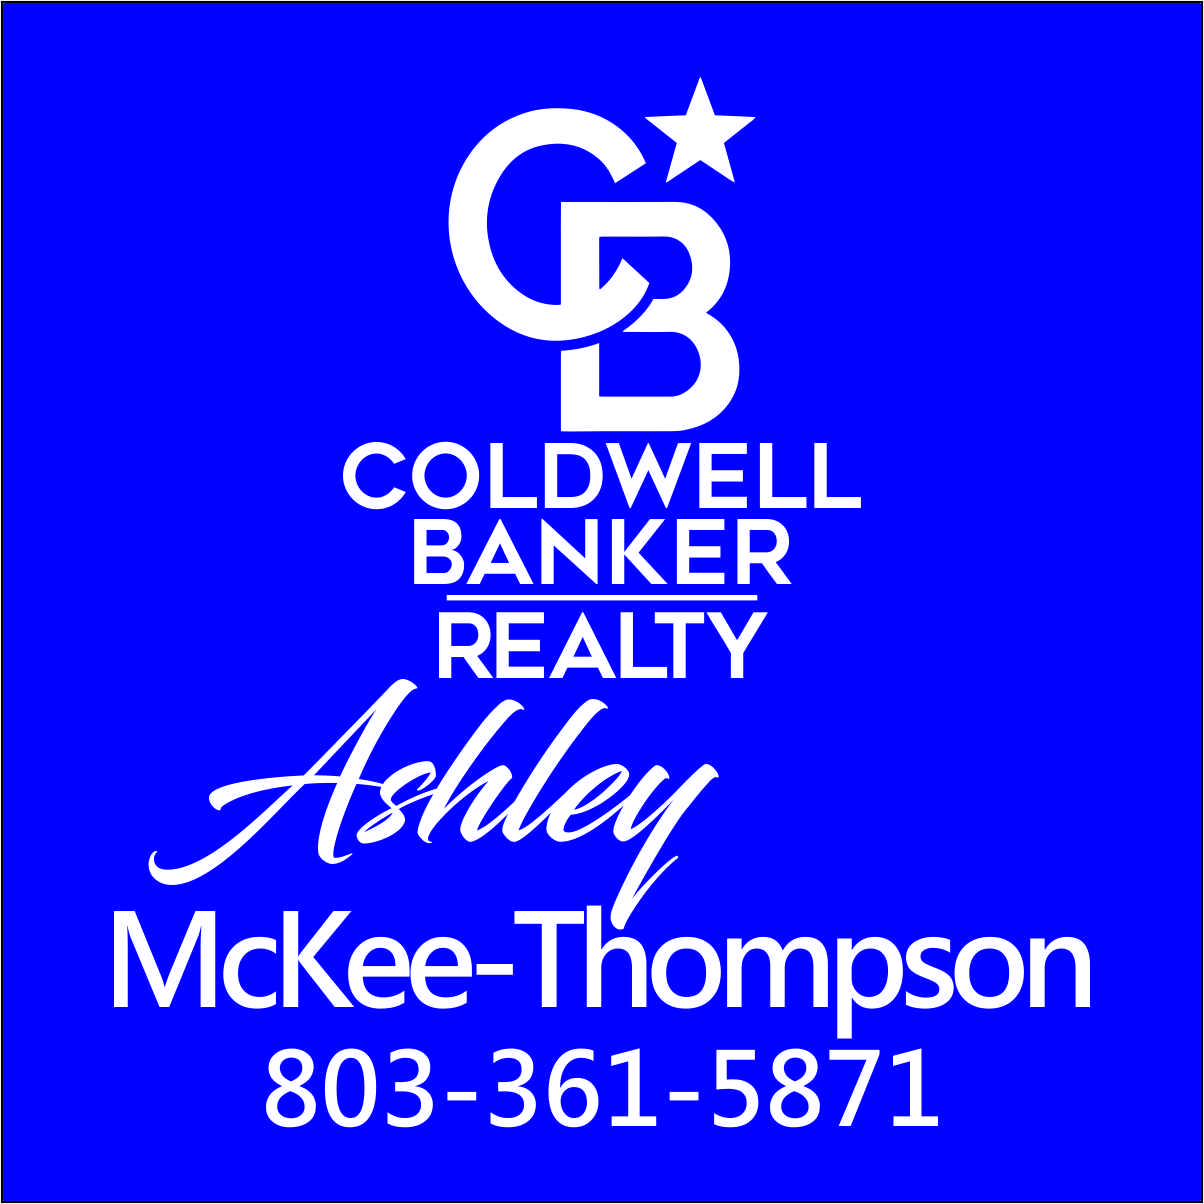 Coldwell Banker Realty Ashley McKee-Thompson.jpg